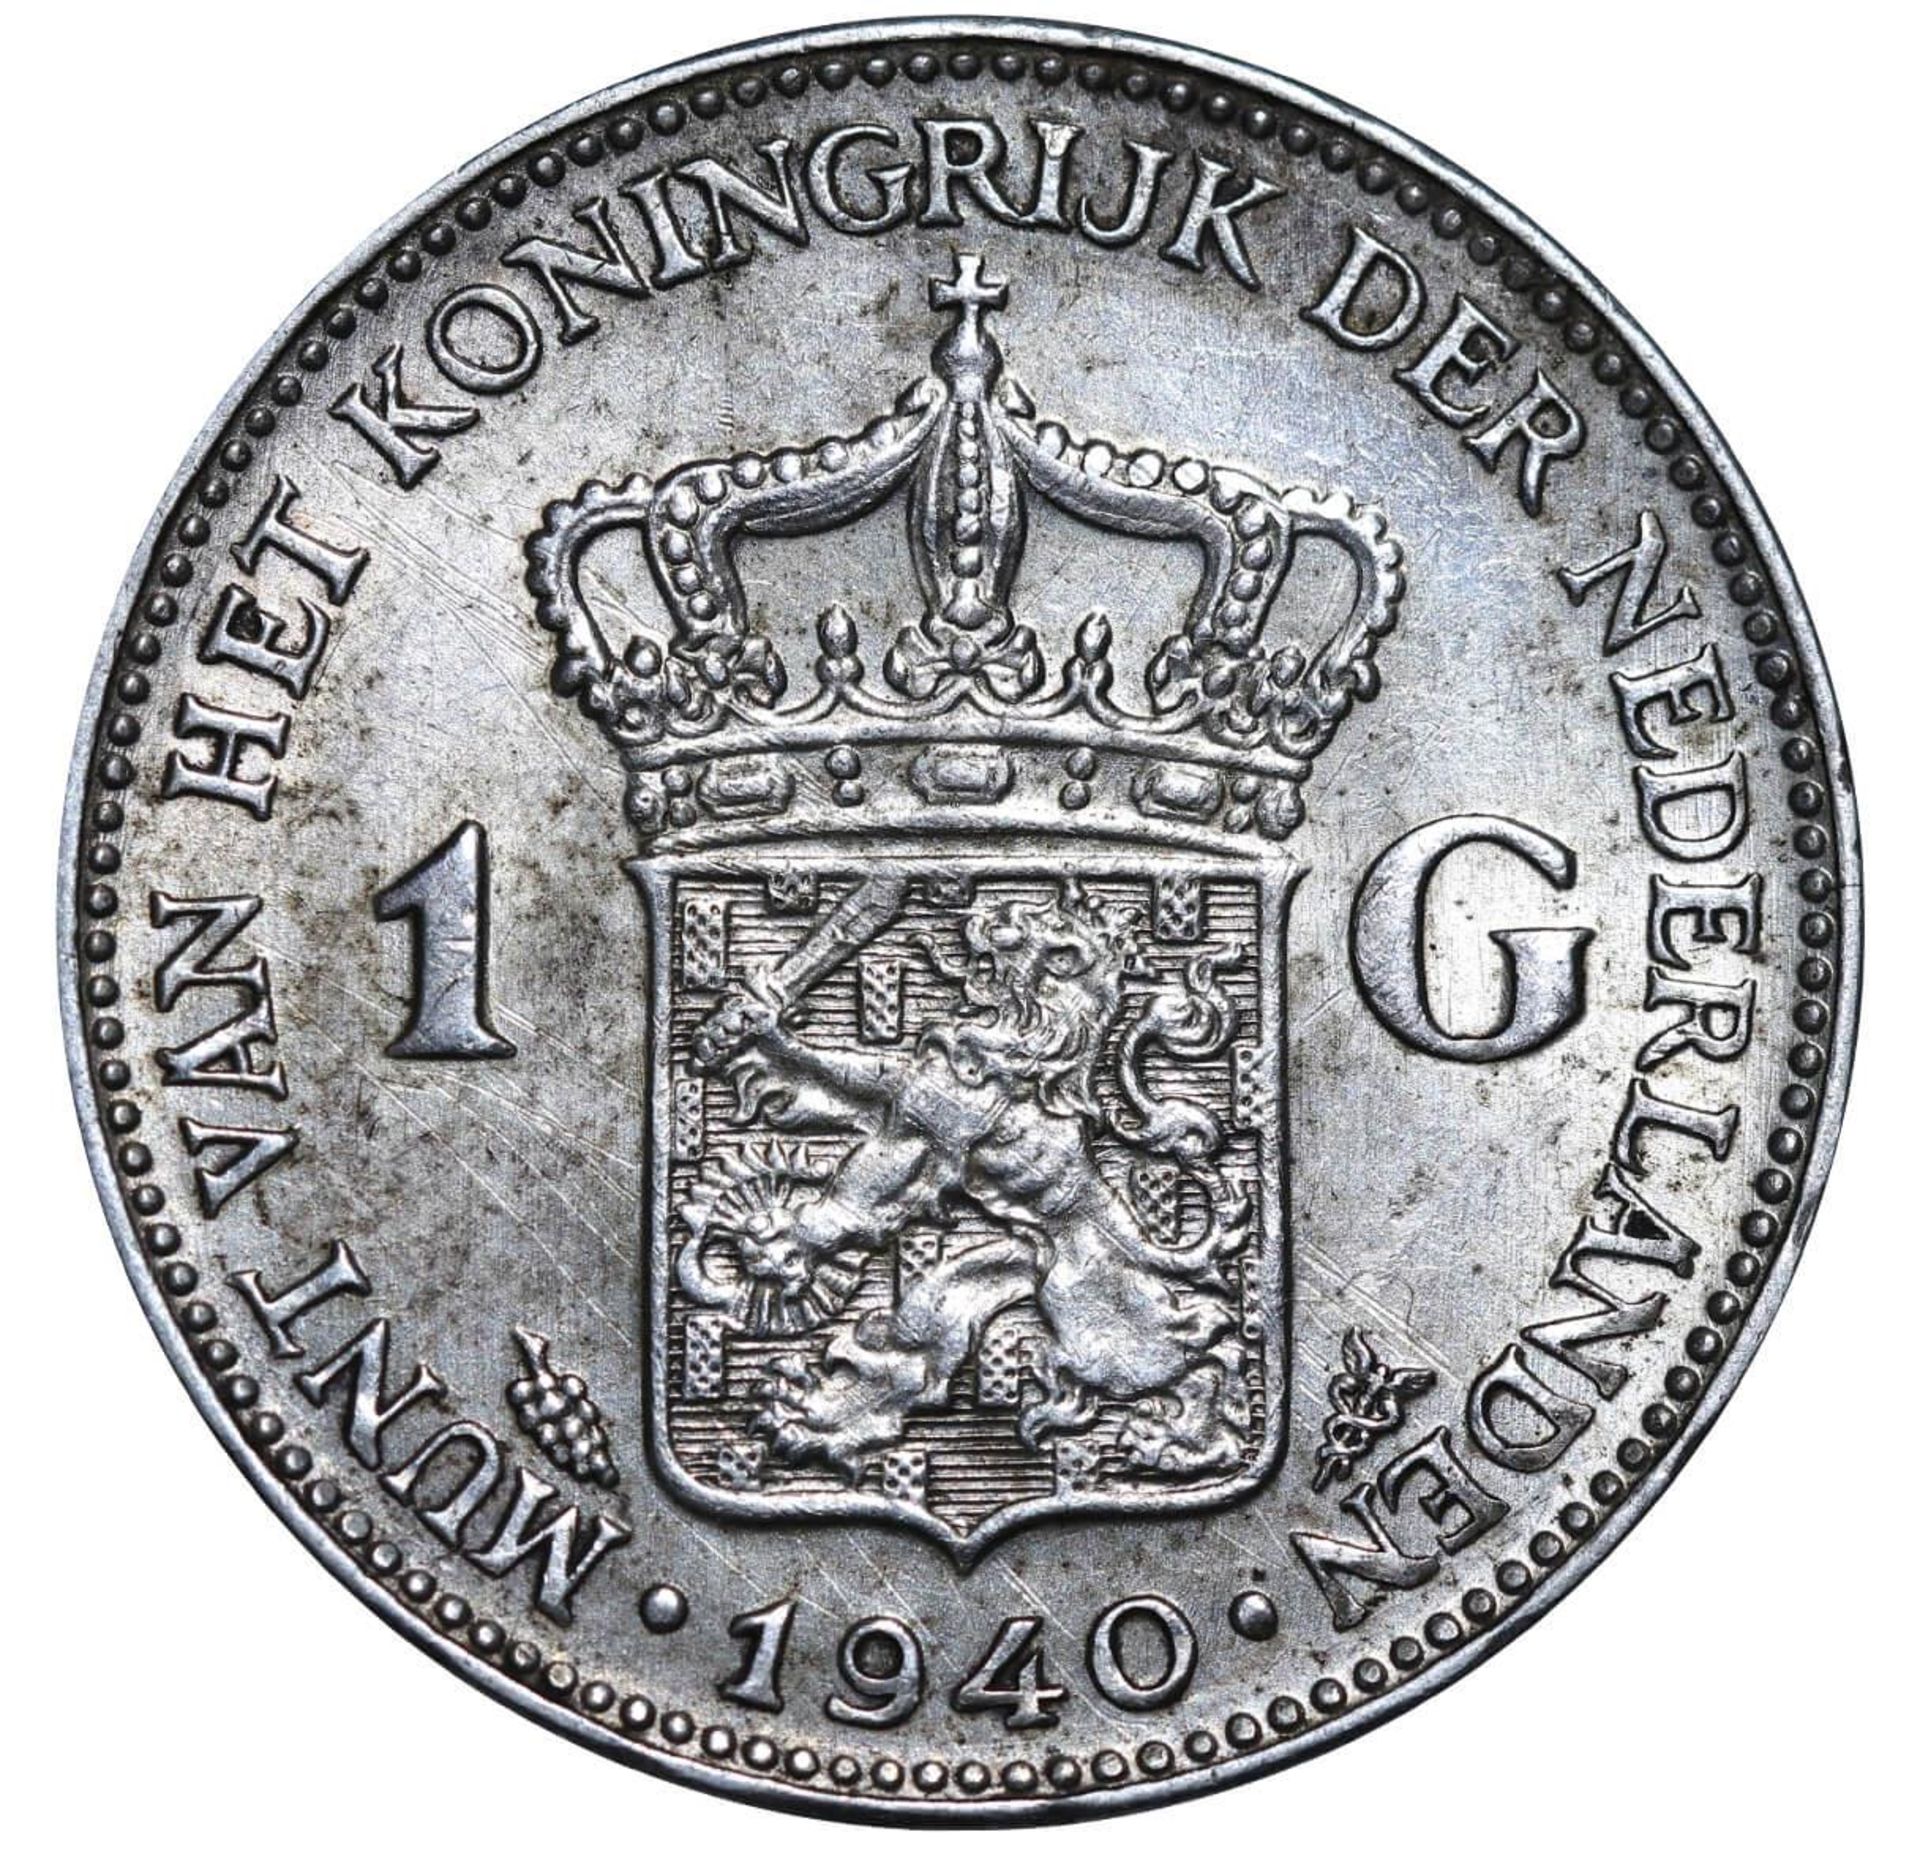 Netherlands, 1 Gulden, 1940 year - Image 3 of 3